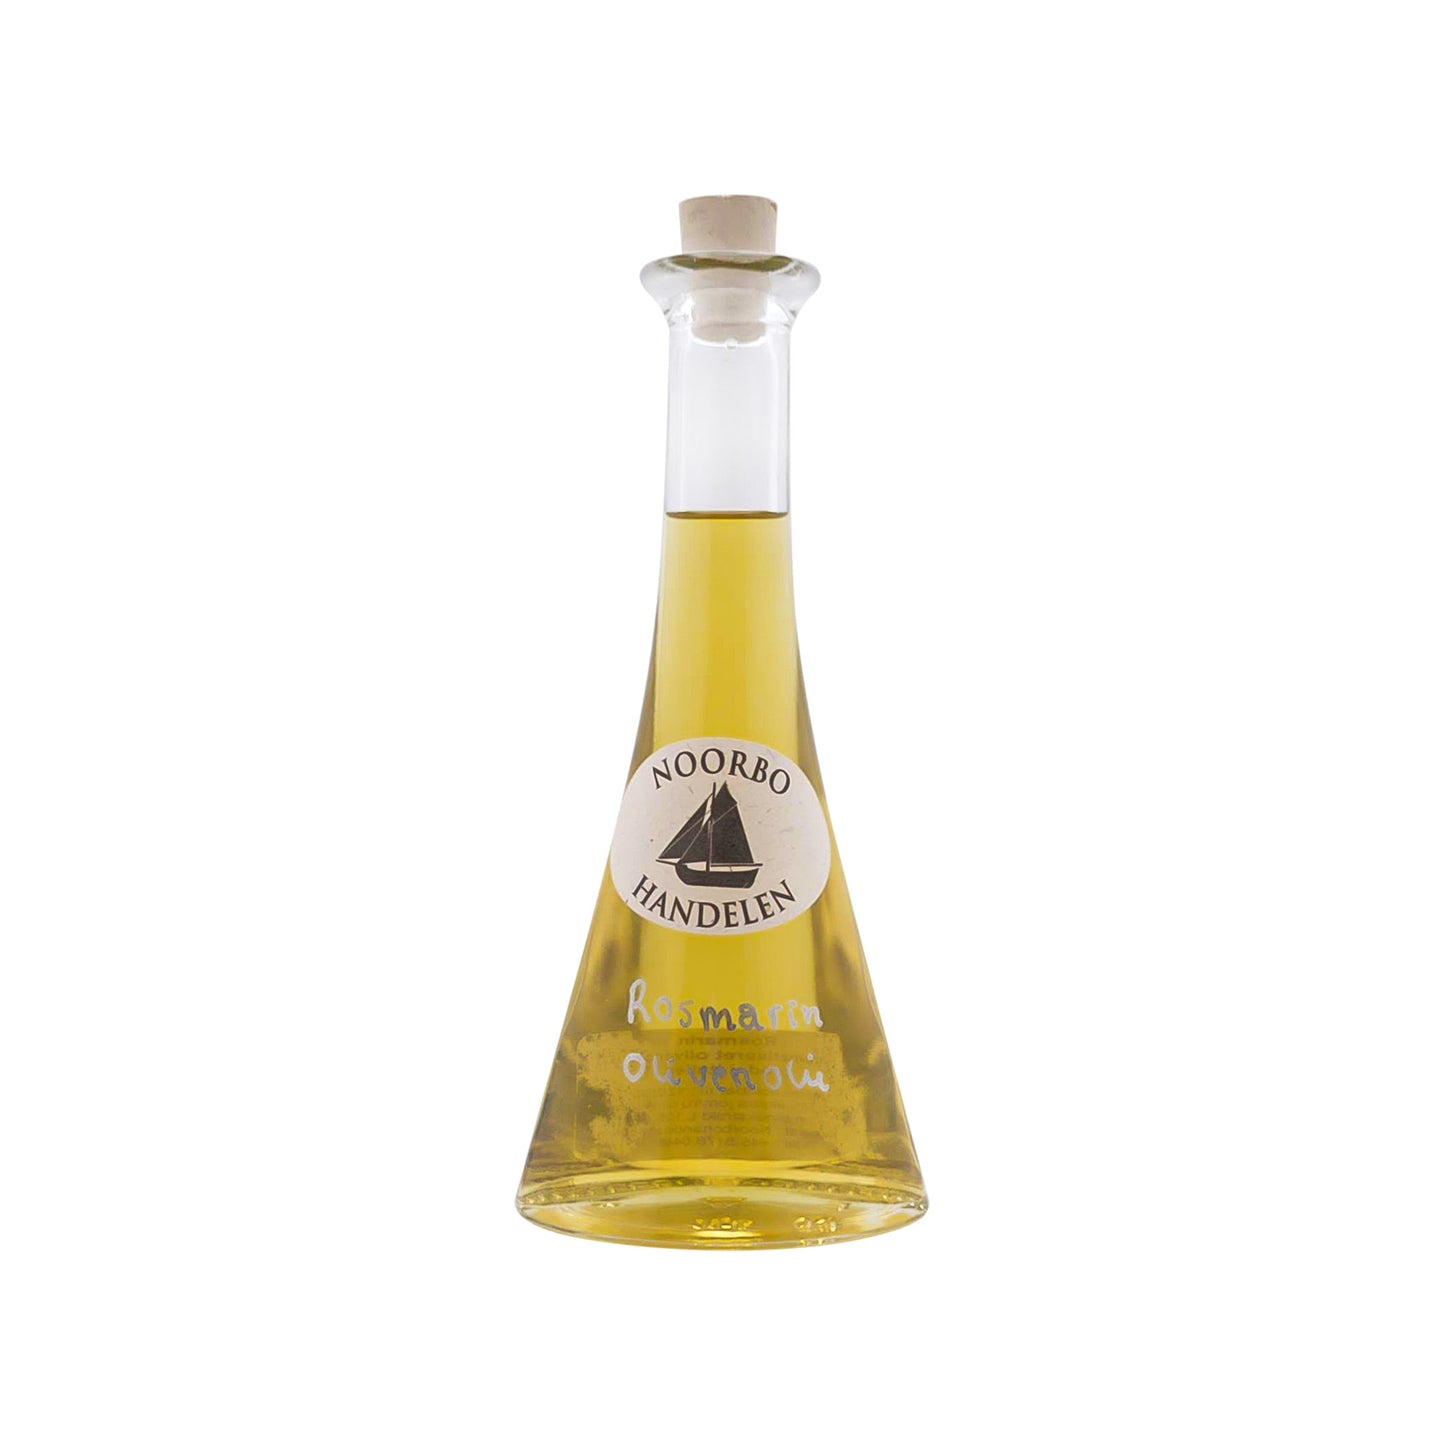 Olivenolie, flere varianter